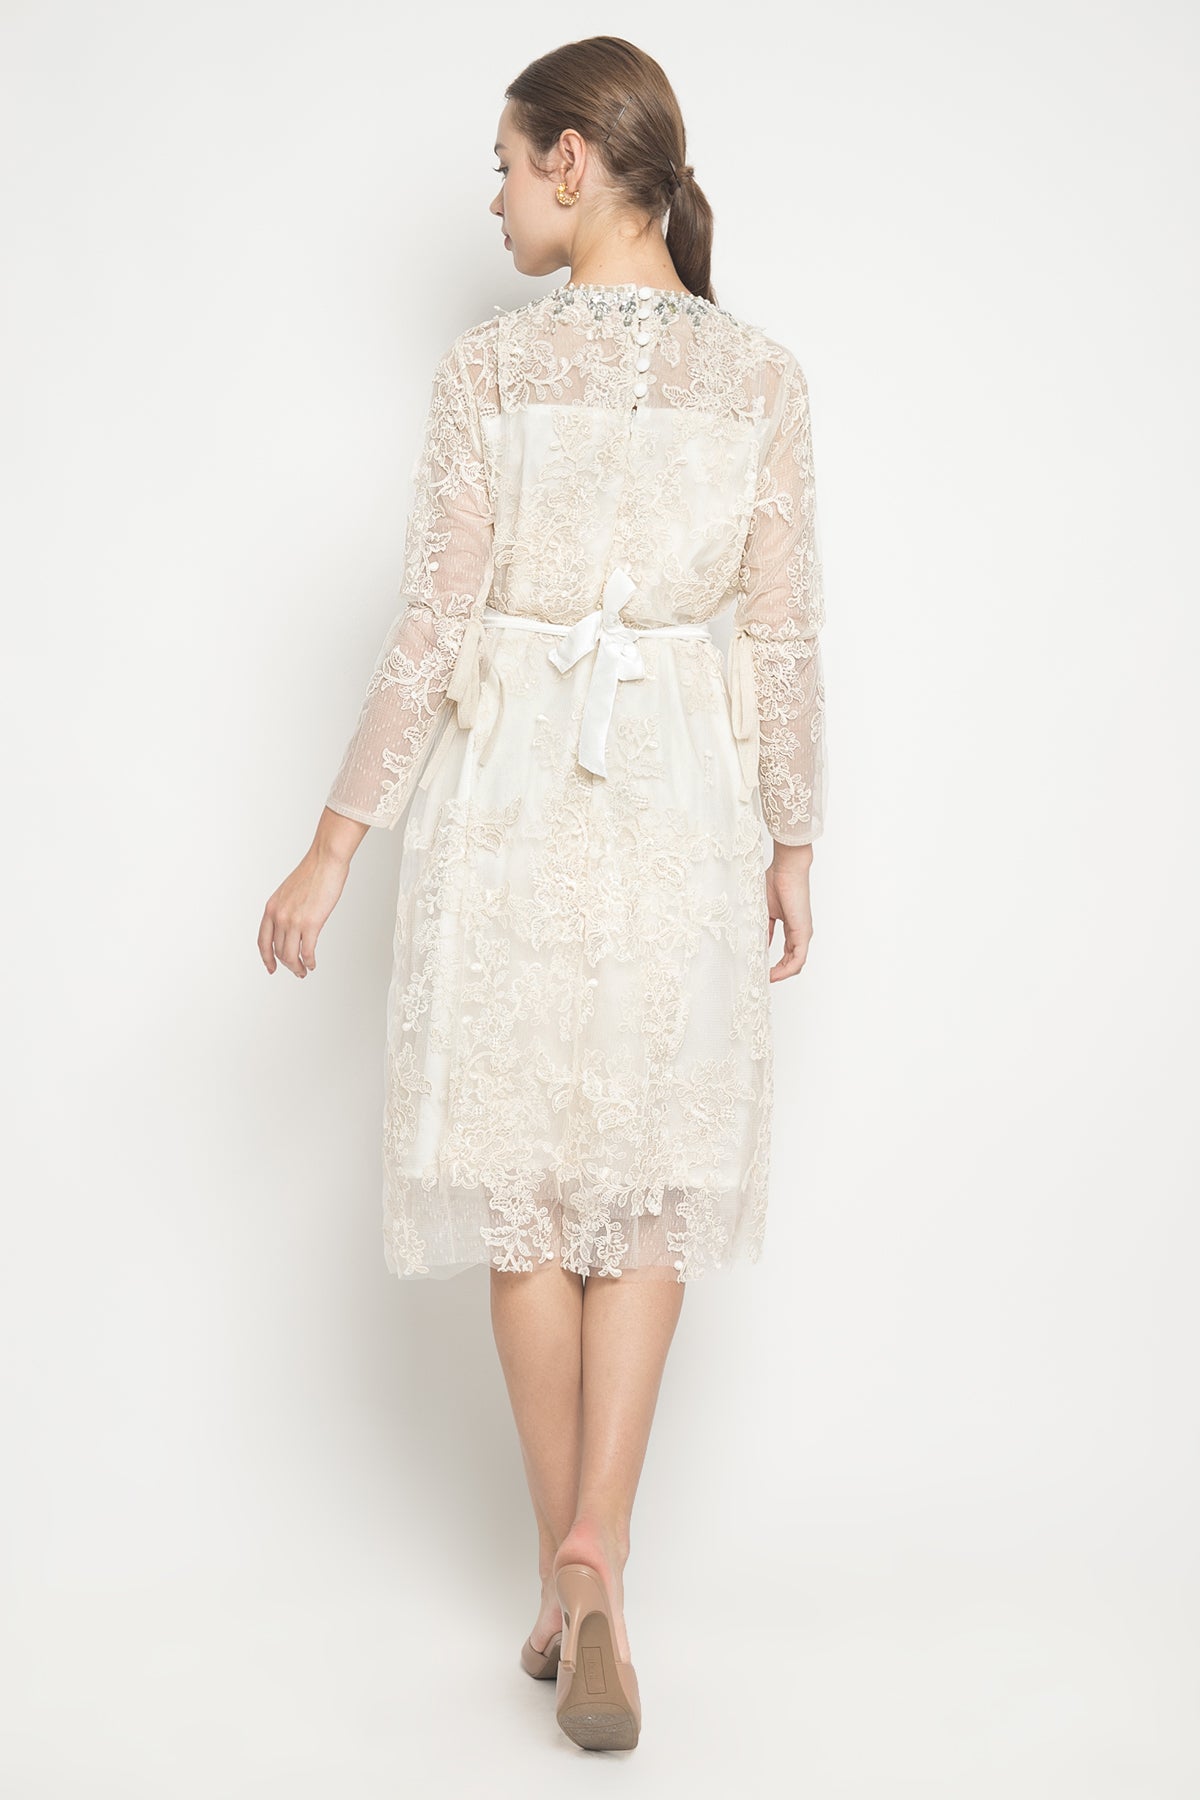 Elfie Dress in Ivory